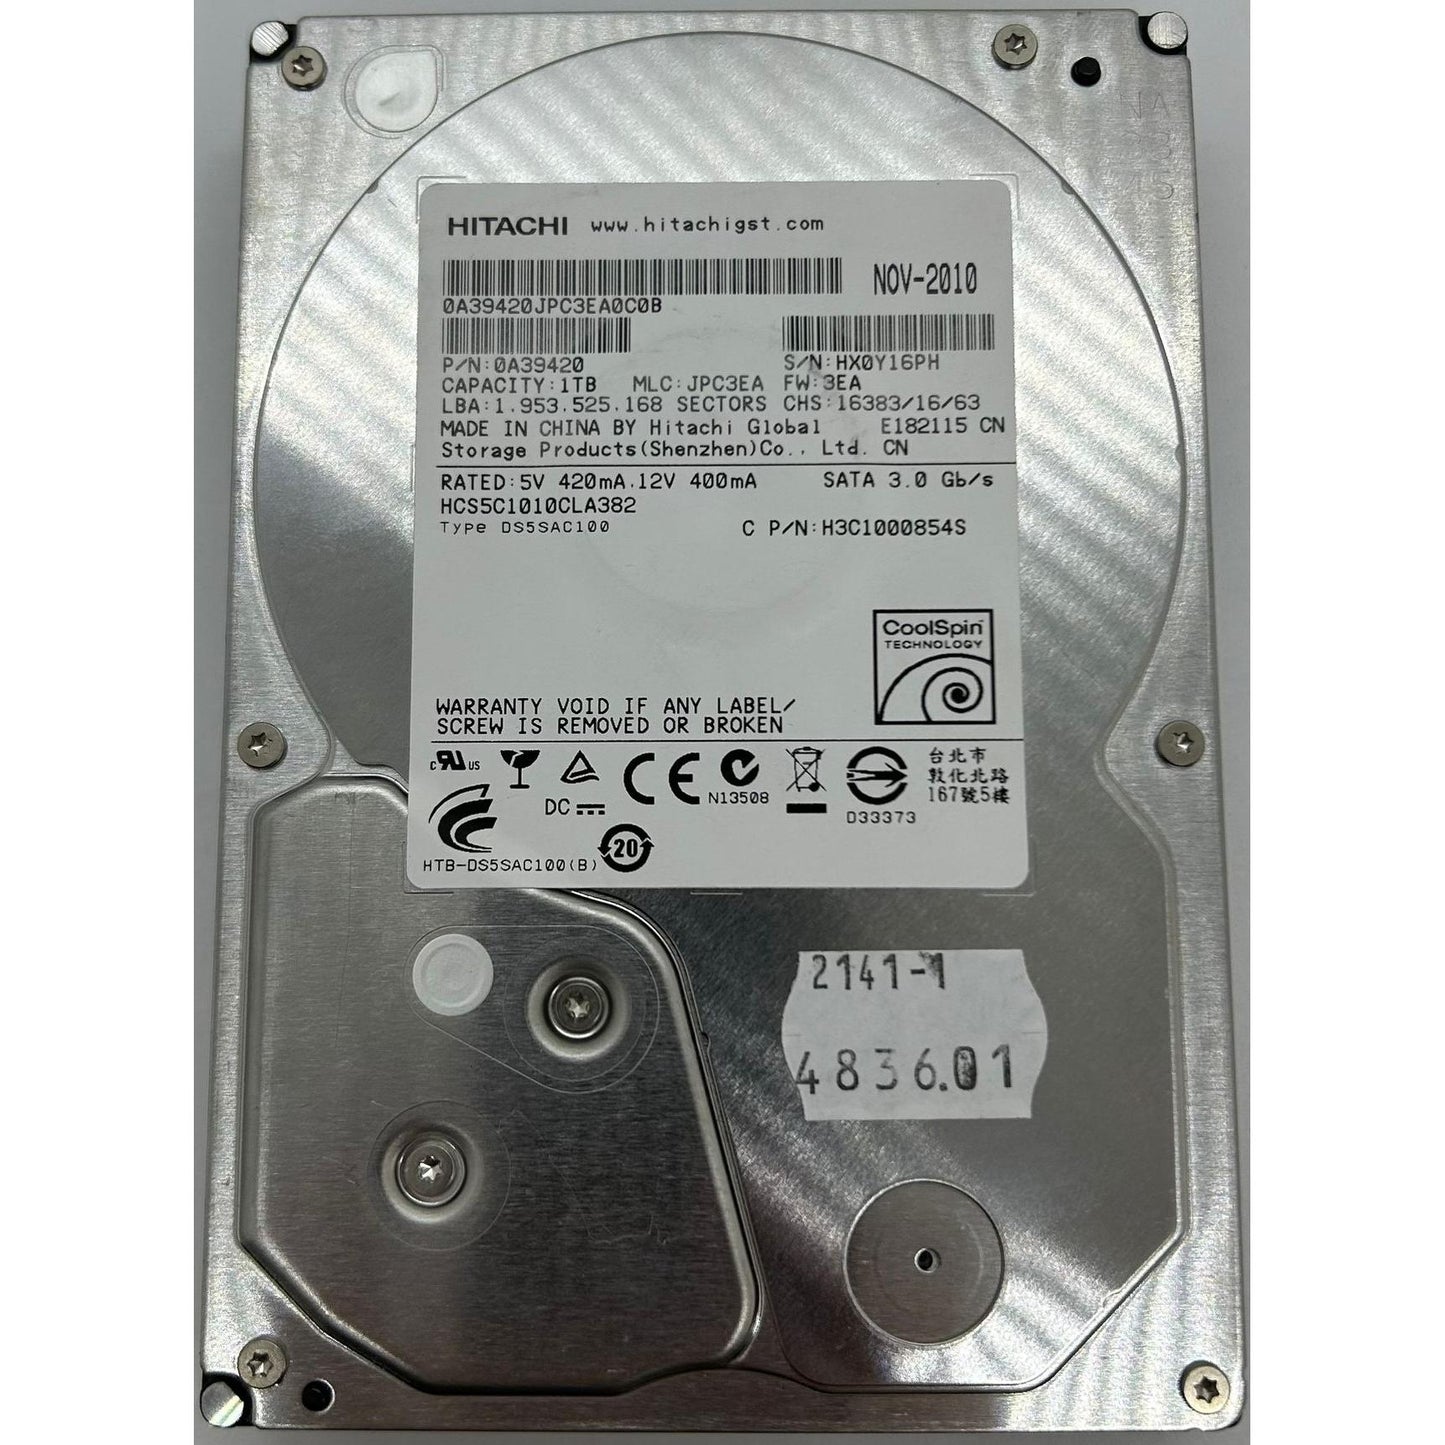 Hitachi 1TB HDD (HCS5C1010CLA382) | 3,5" Interne Festplatte | Desktop Backup Storage